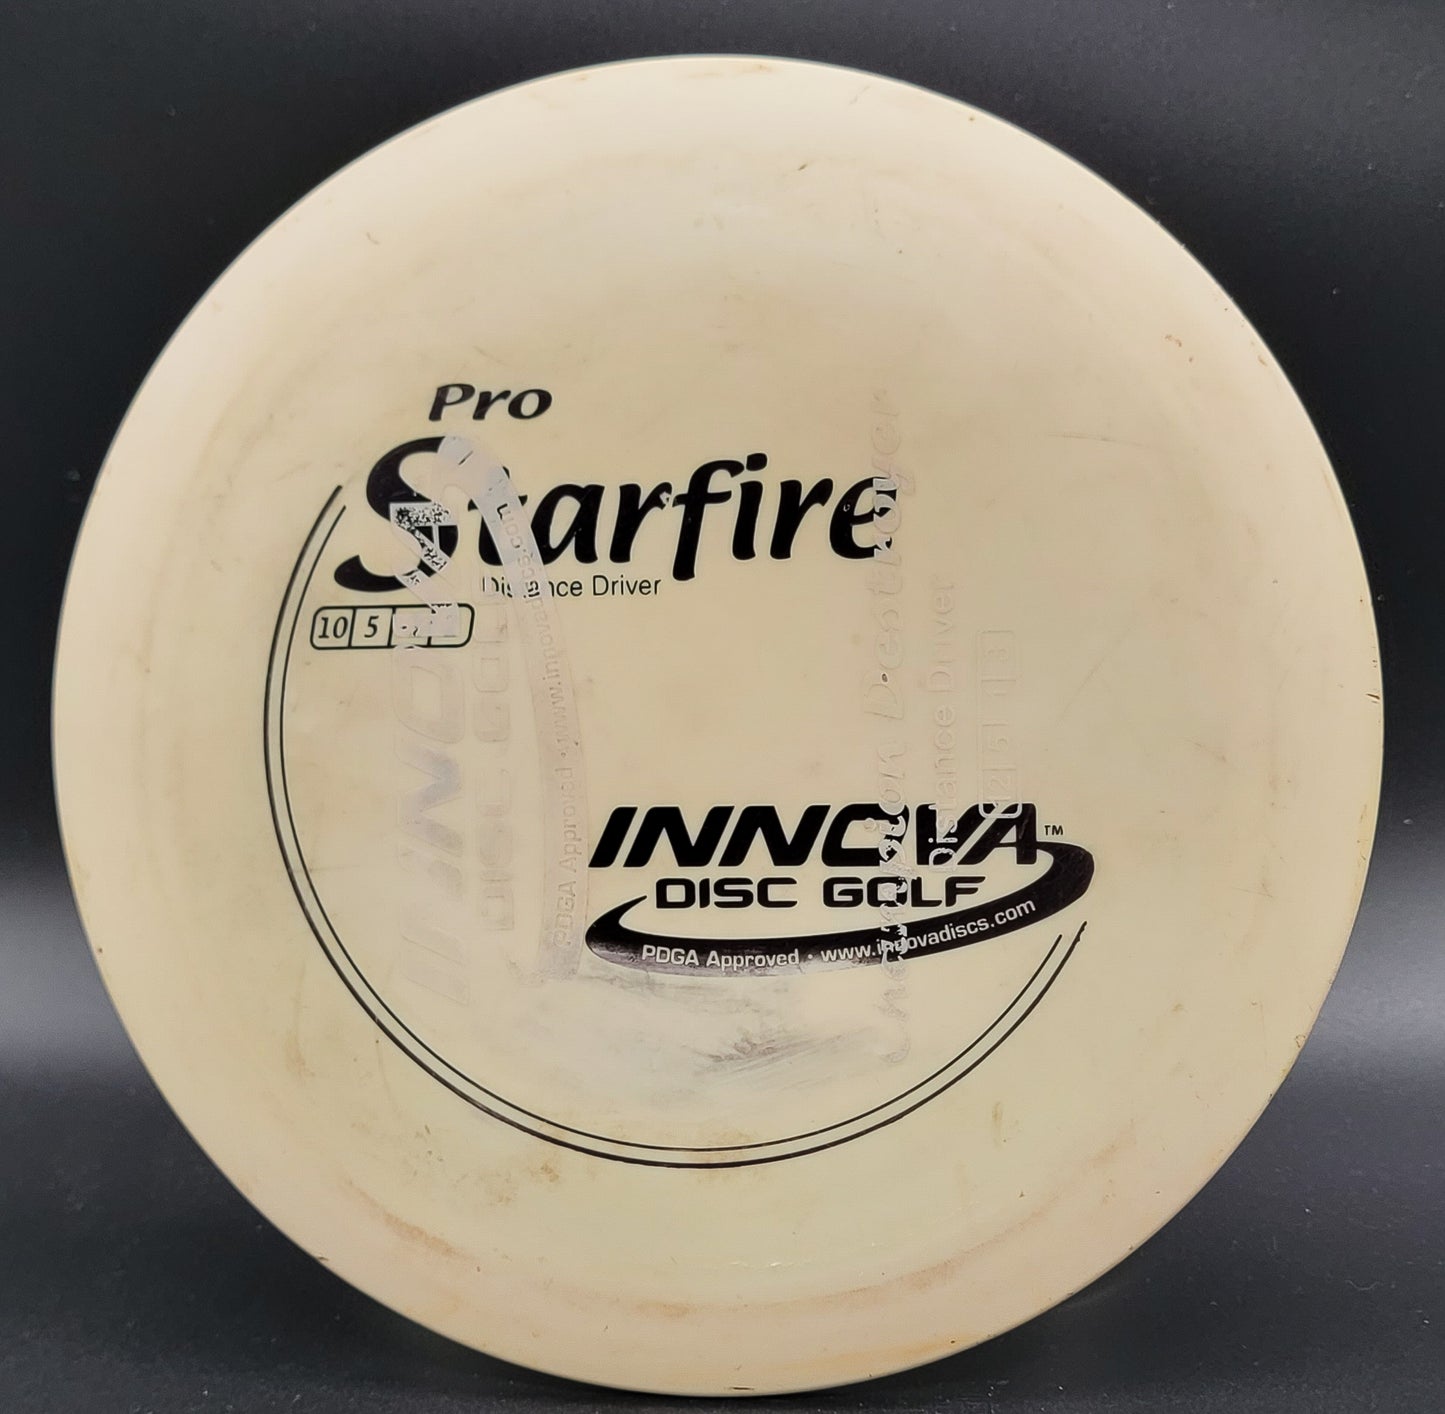 167g Pro Starfire